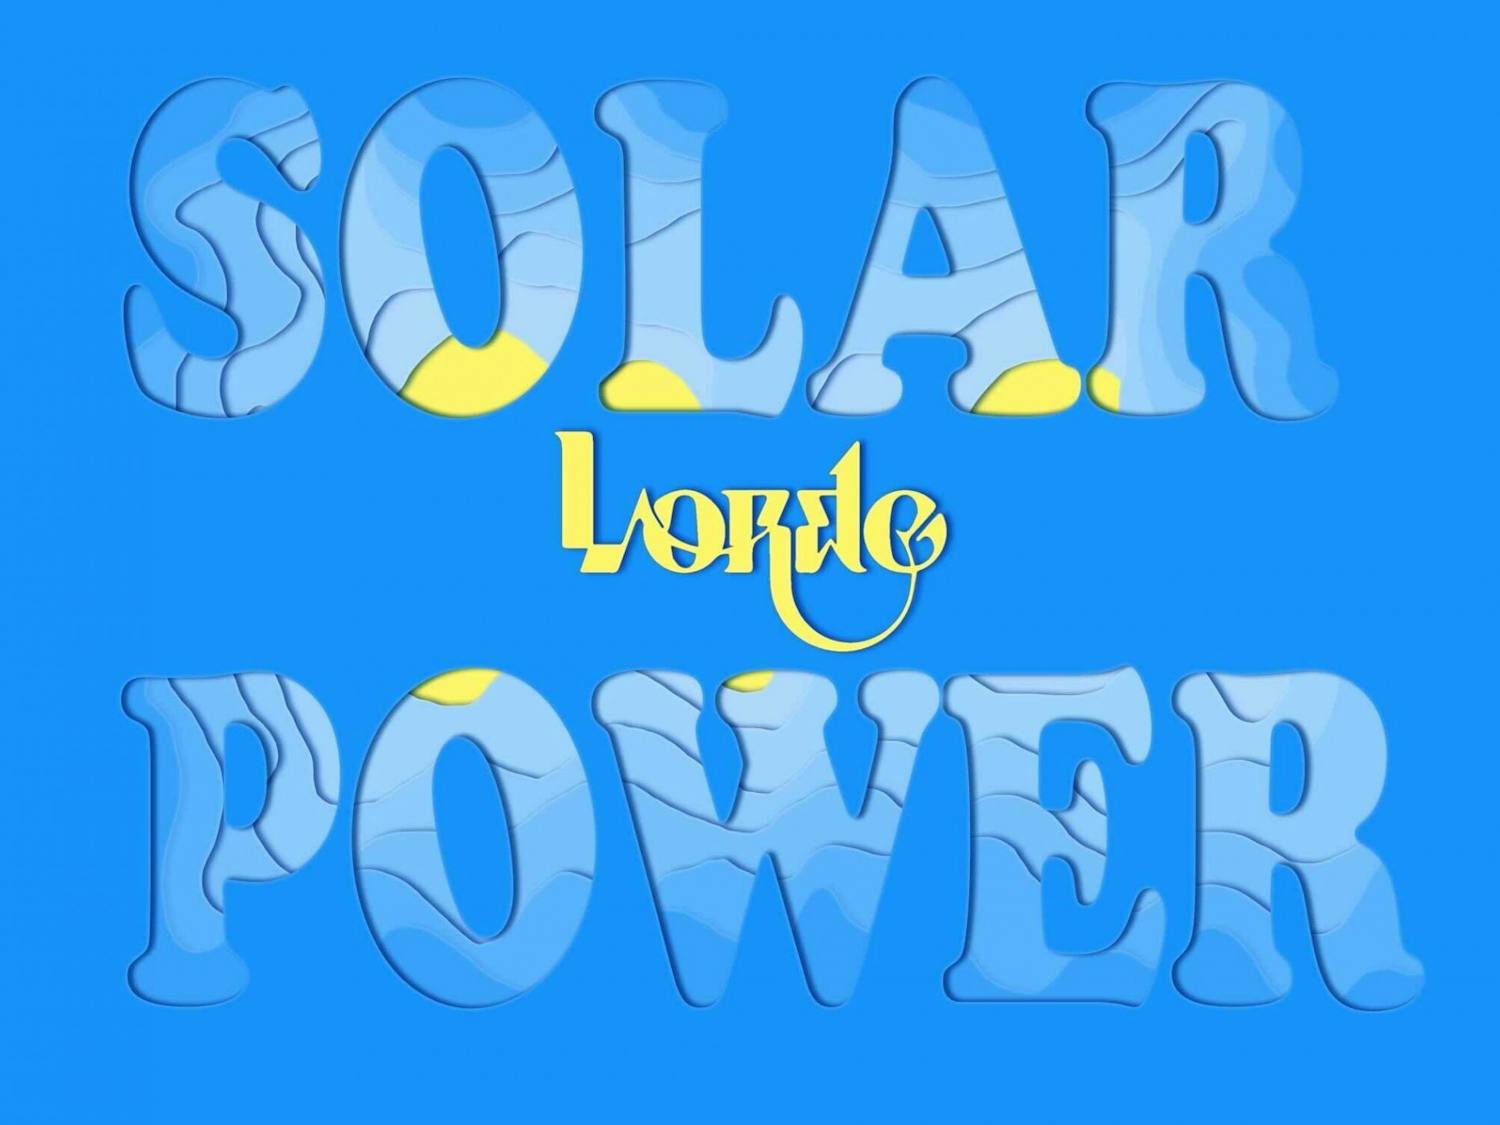 Lorde Solar Power.jpg